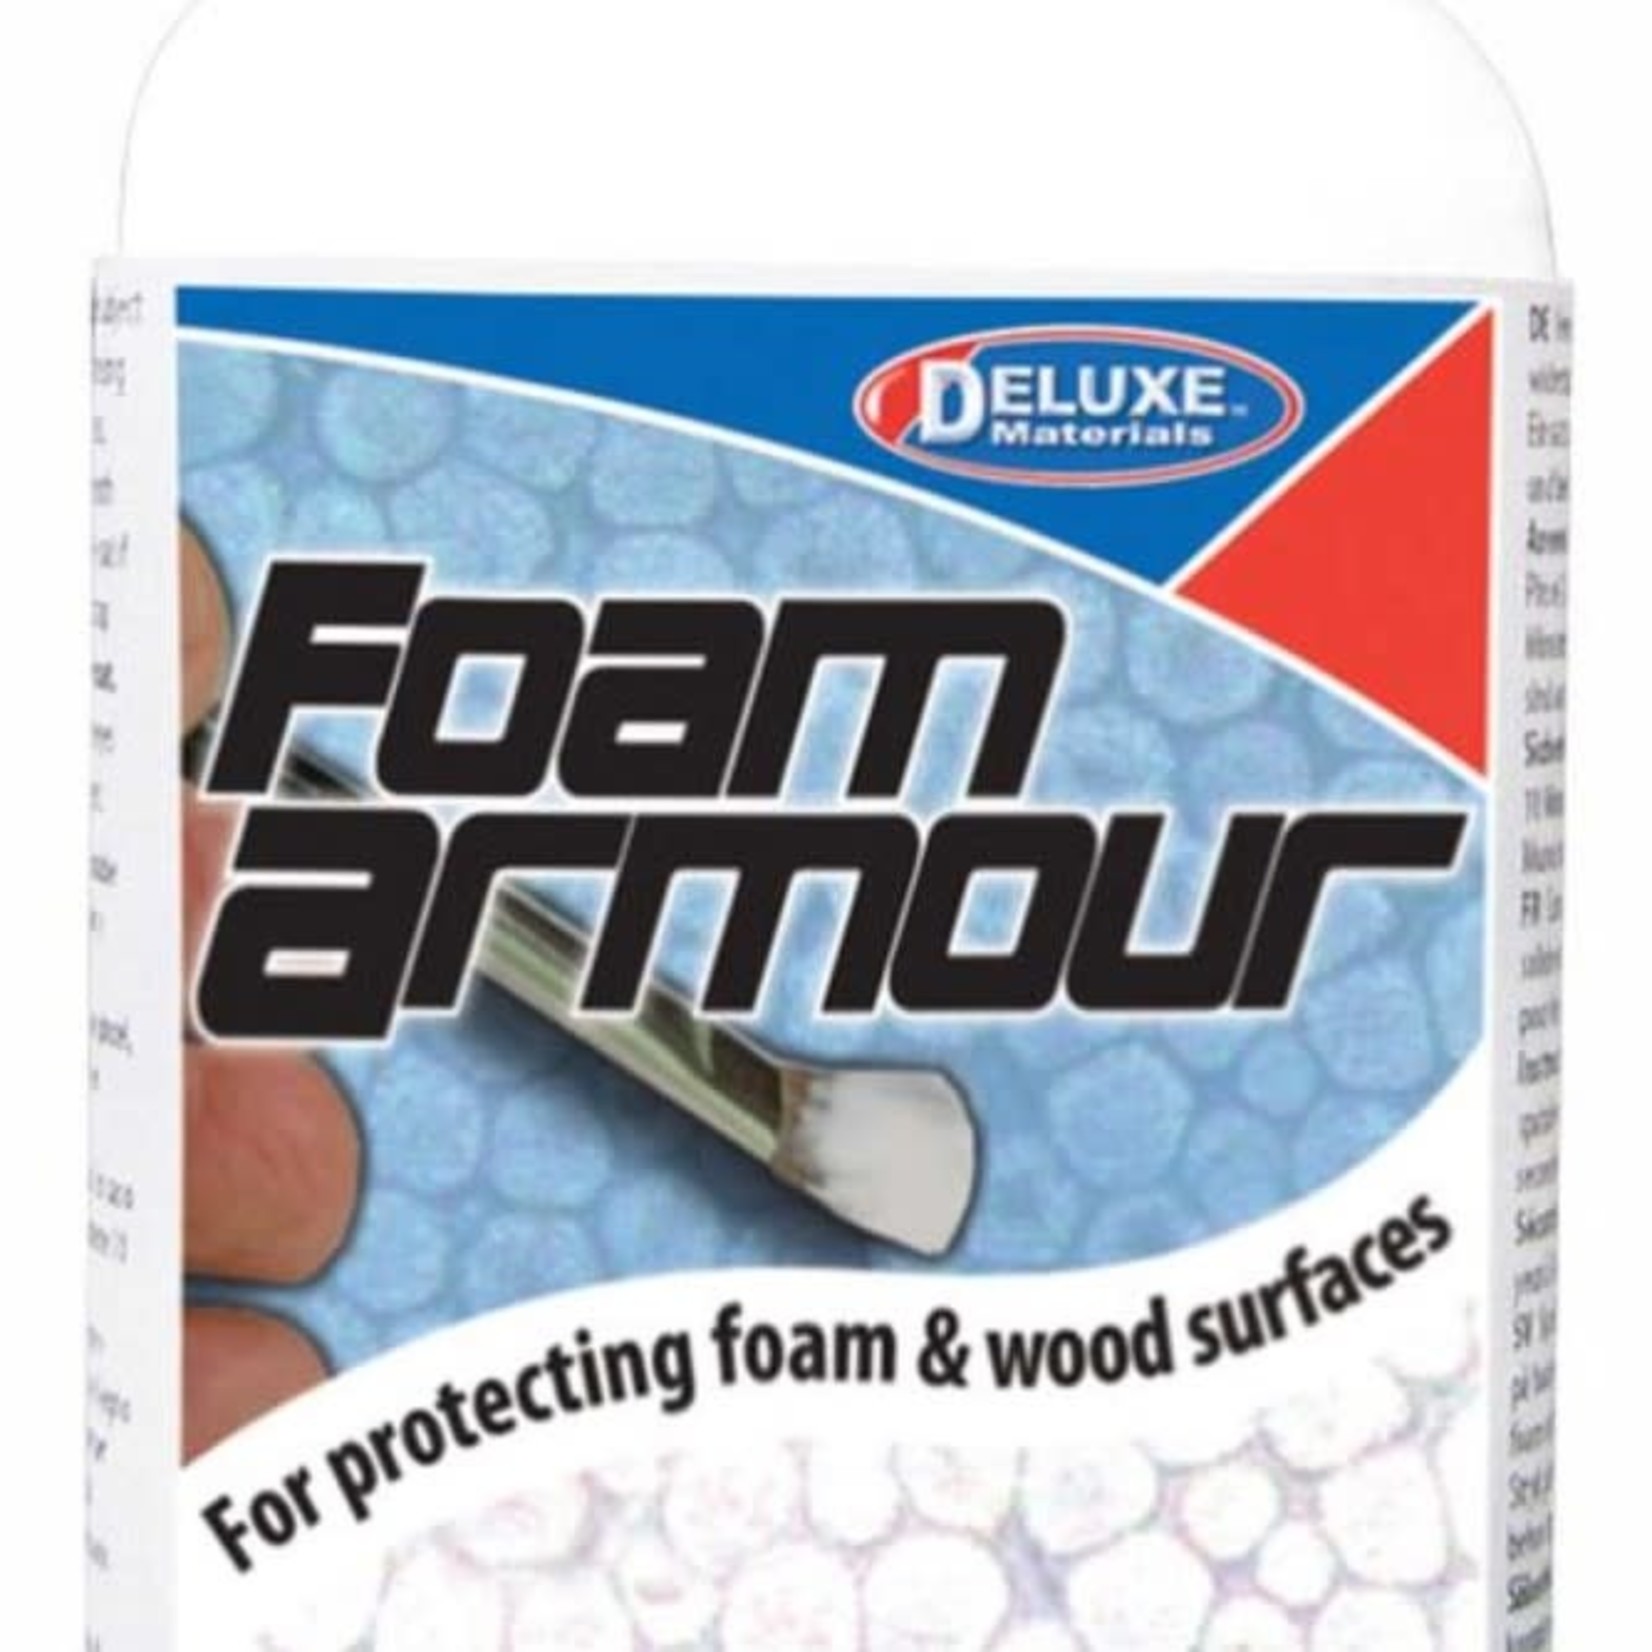 Deluxe Materials Foam Armour